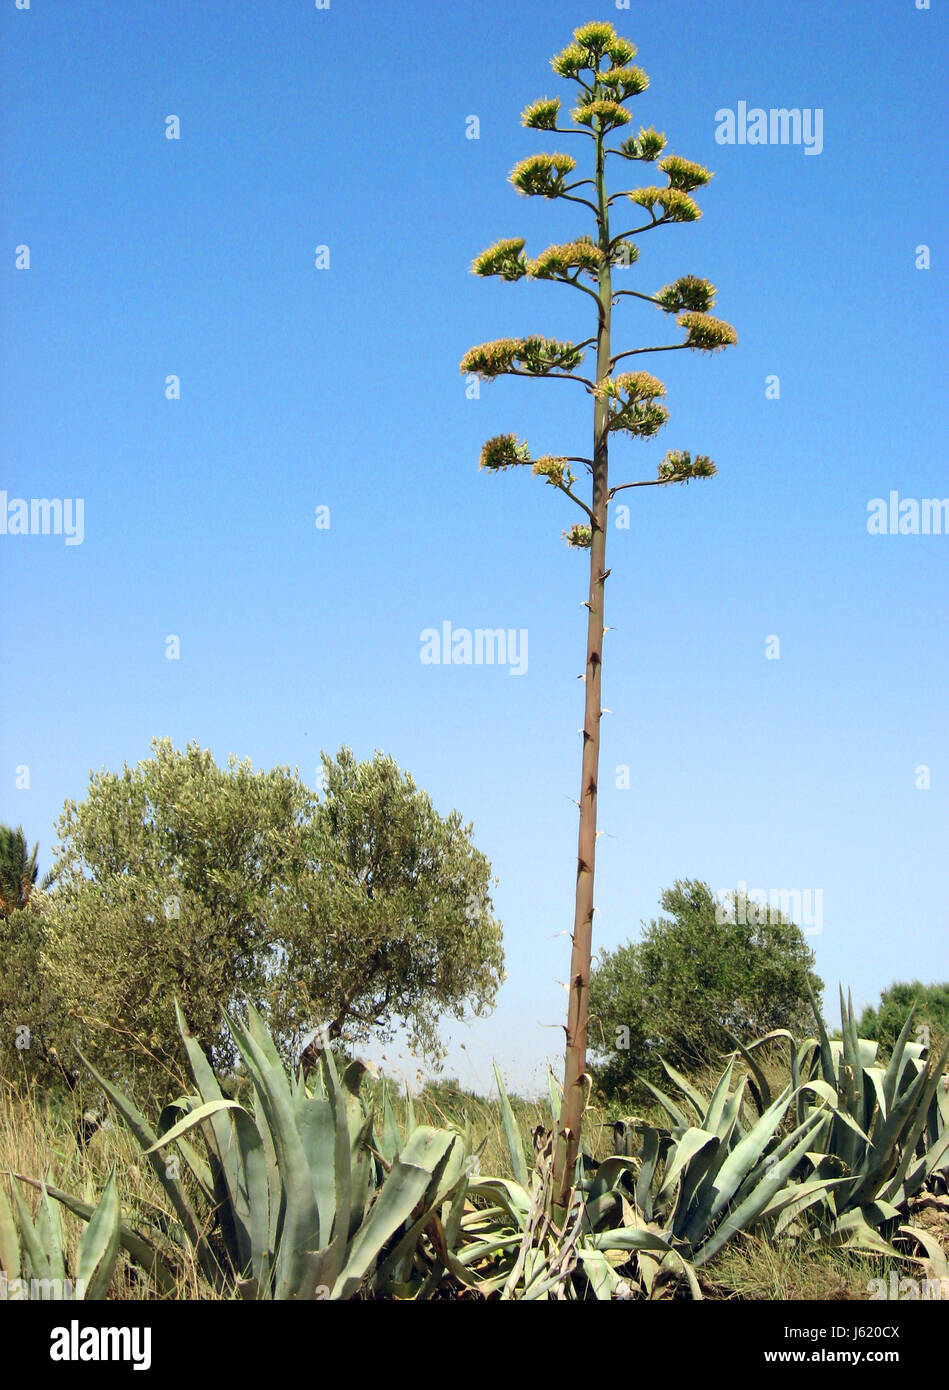 blue plant dry dried up barren reservoir bloom blossom flourish flourishing Stock Photo